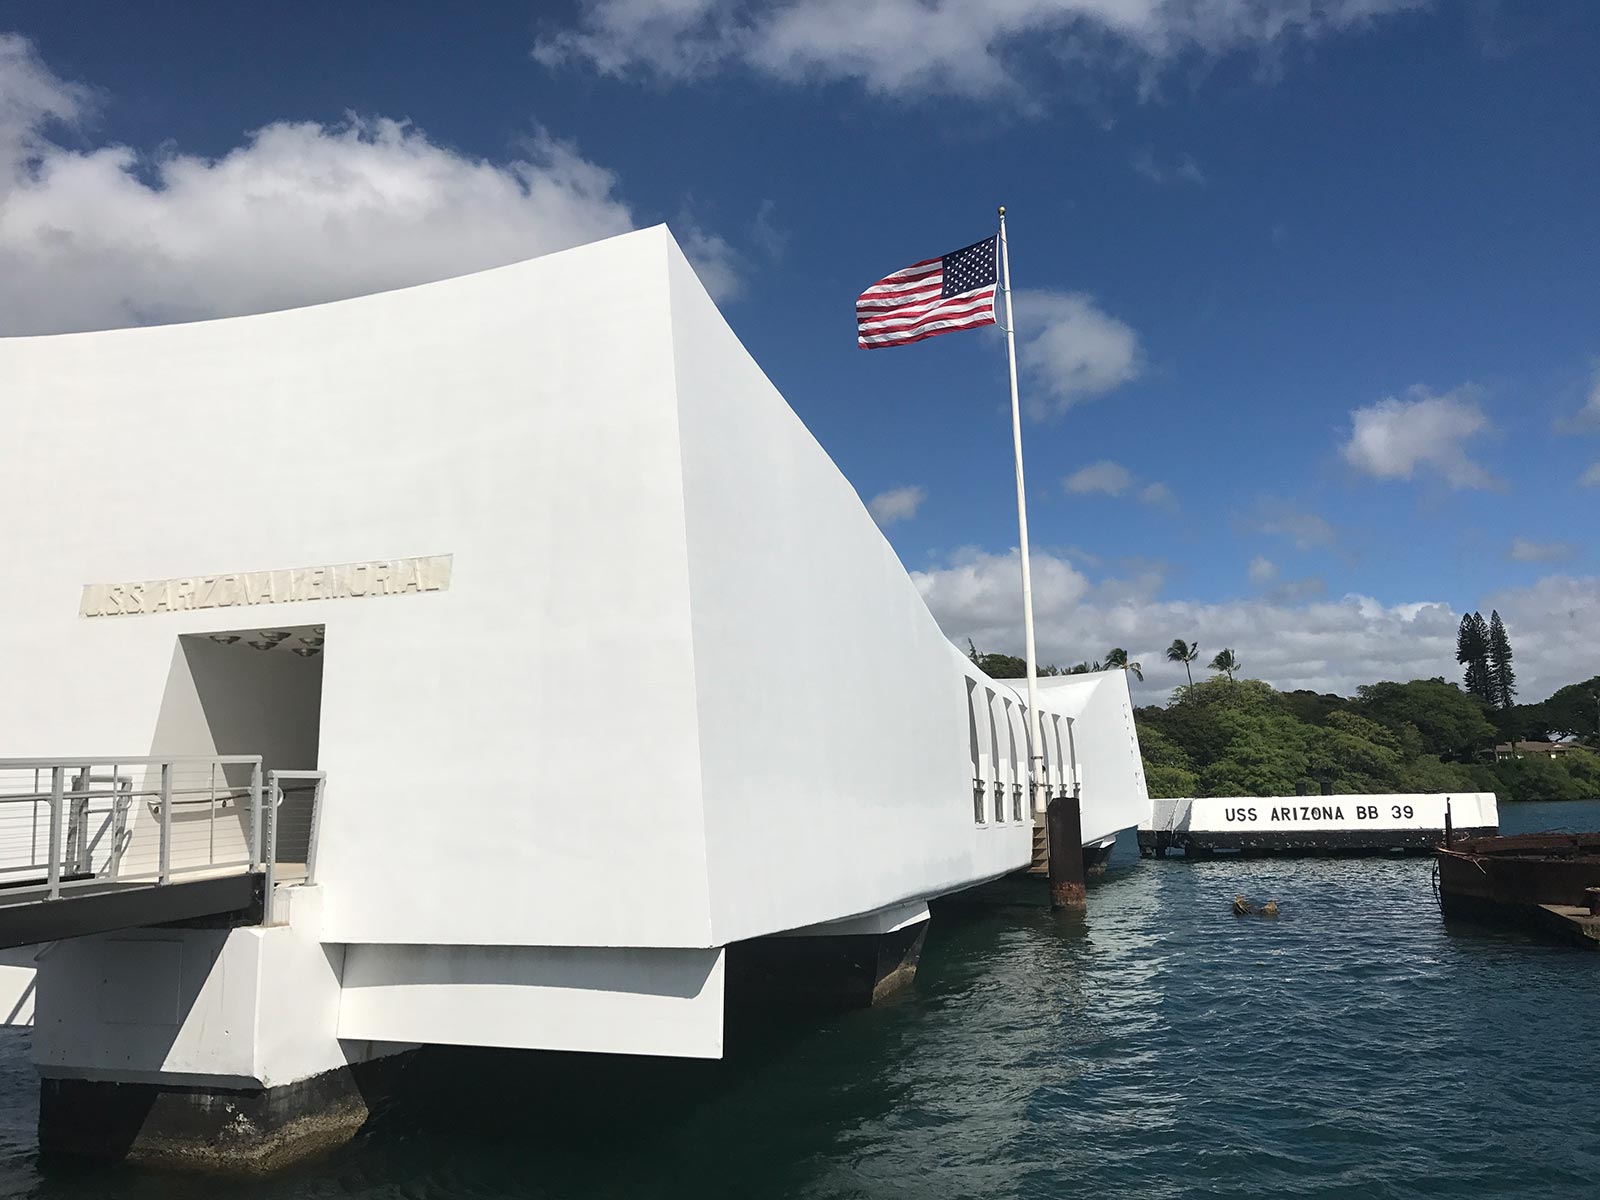 USS Arizona war memorial in Pearl Harbor, Hawaii. Pearl Harbour, Hawaii